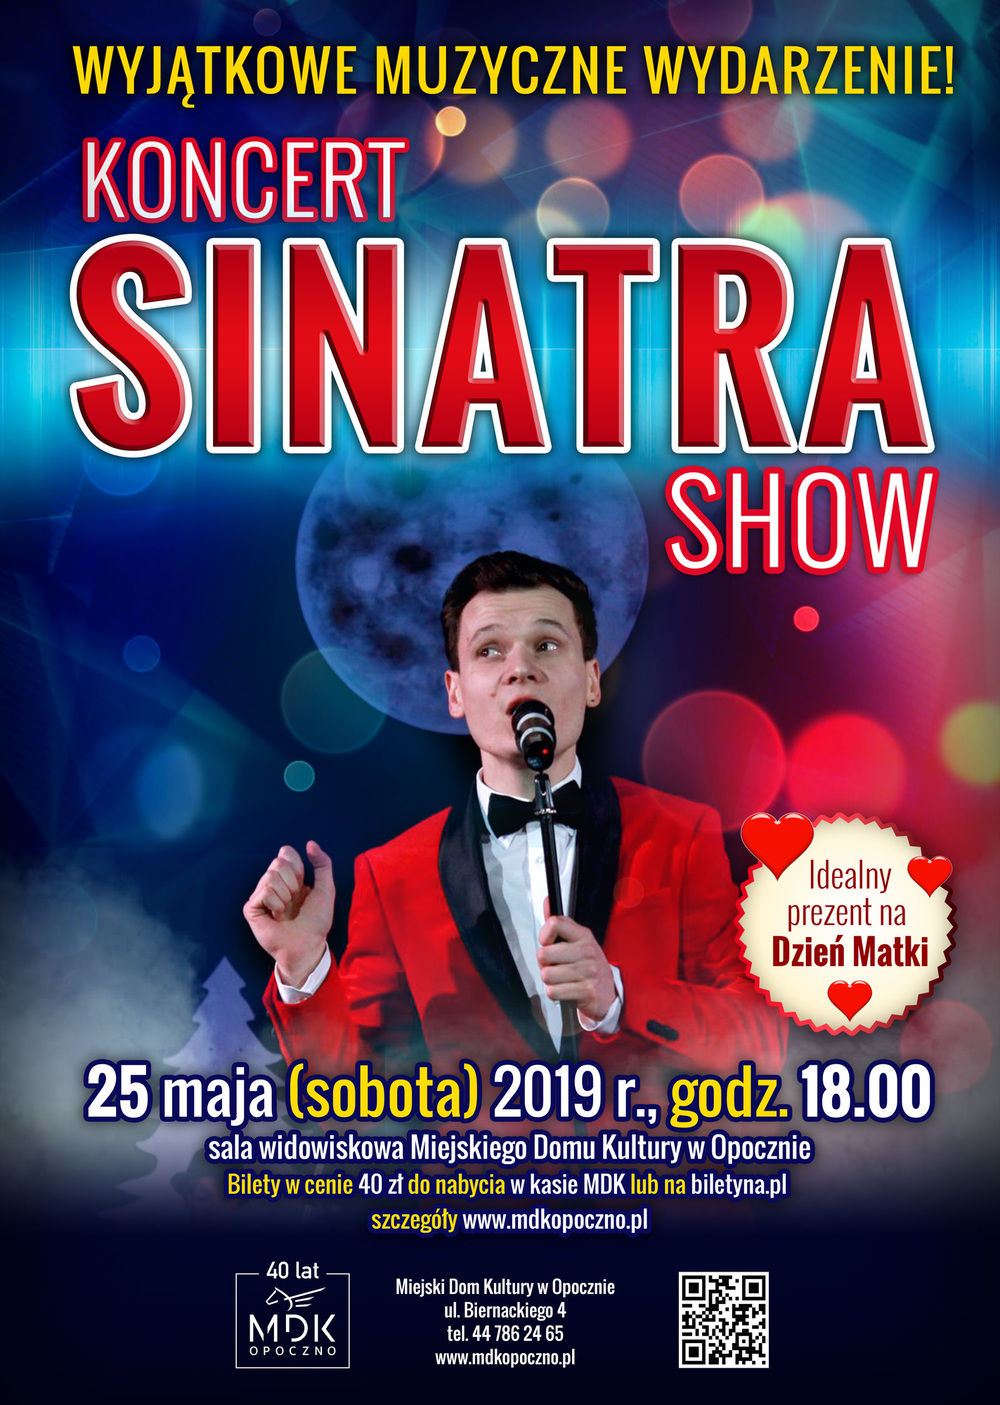 Sinatra show